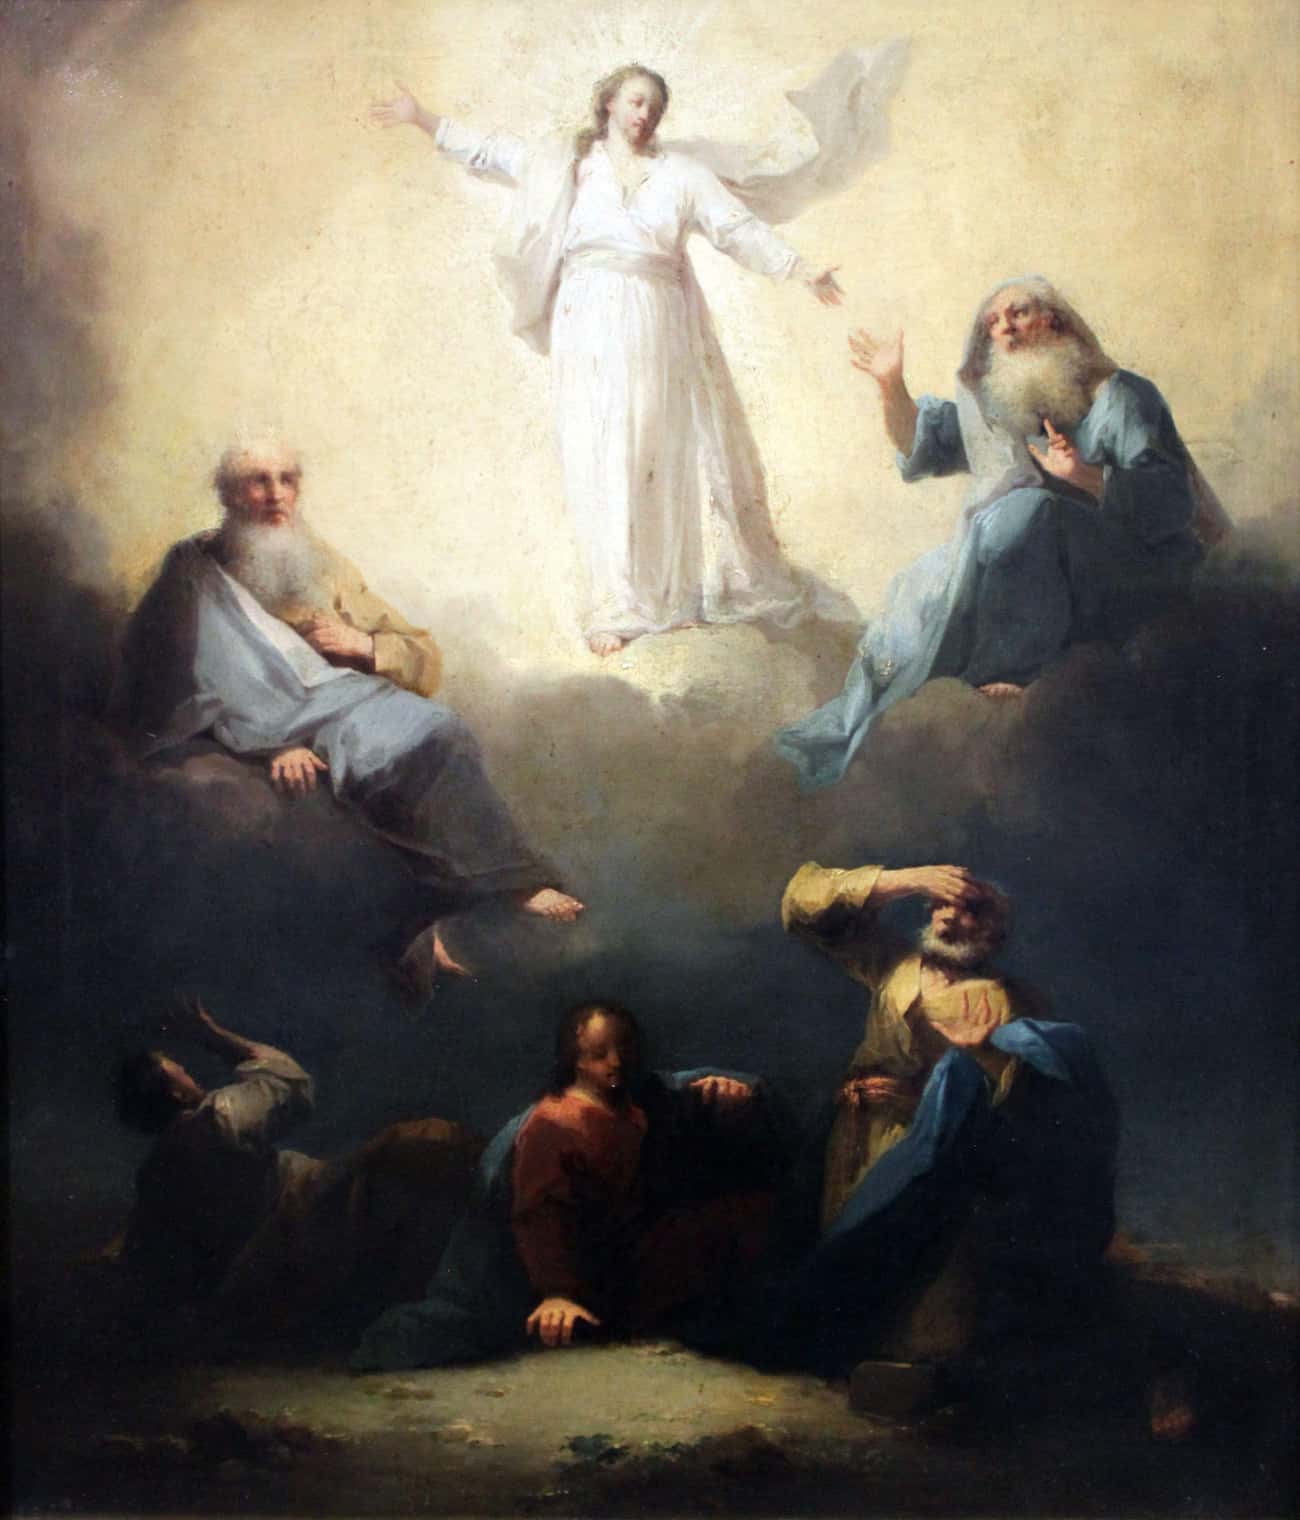 Dean Braxton Met Jesus, Who Sent Him Back To Earth To Speak Of His Heavenly Revelations